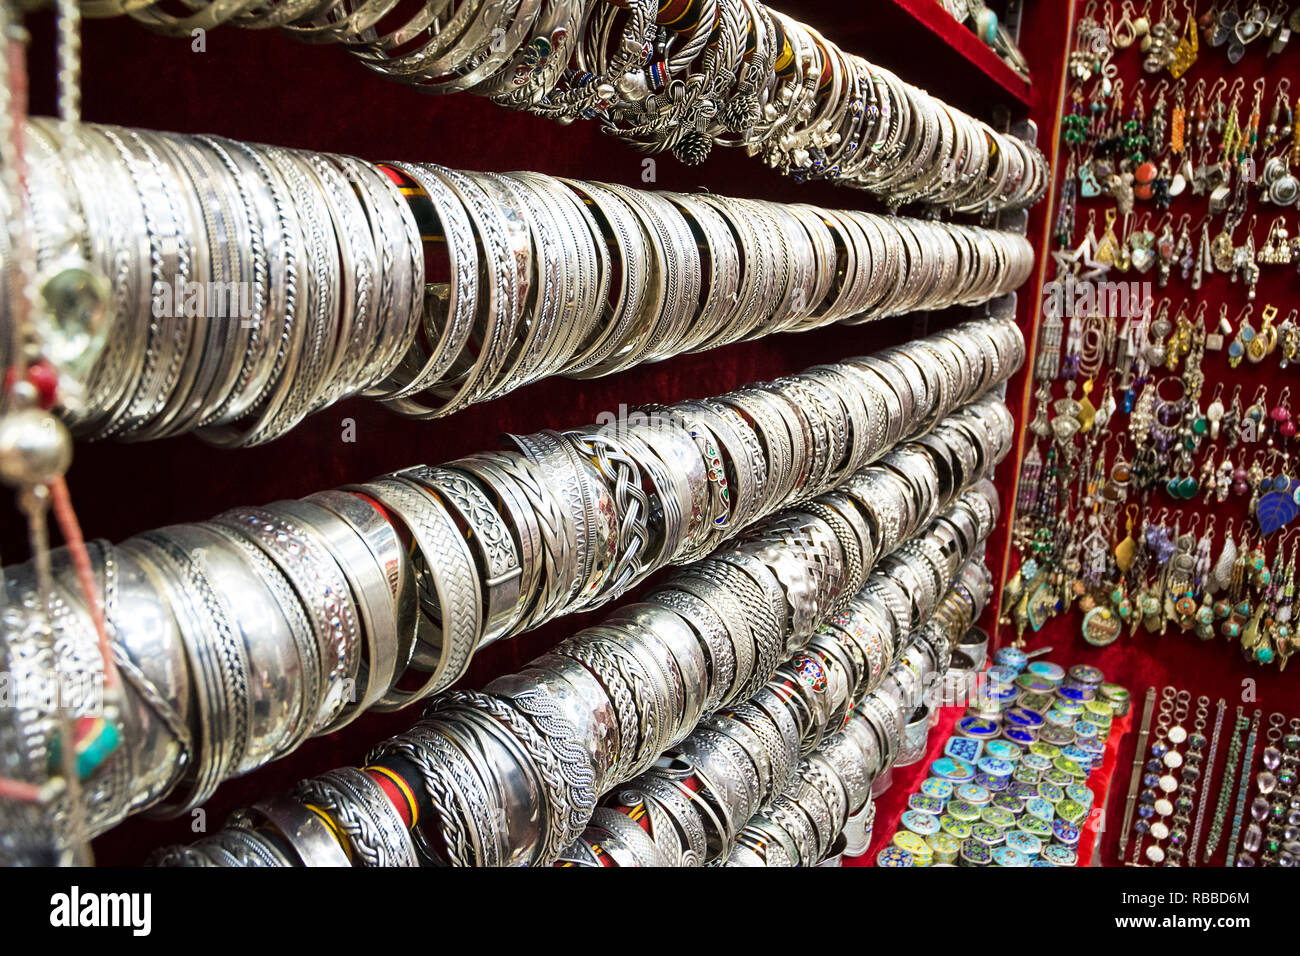 Silver bracelets on display in a souk Stock Photo